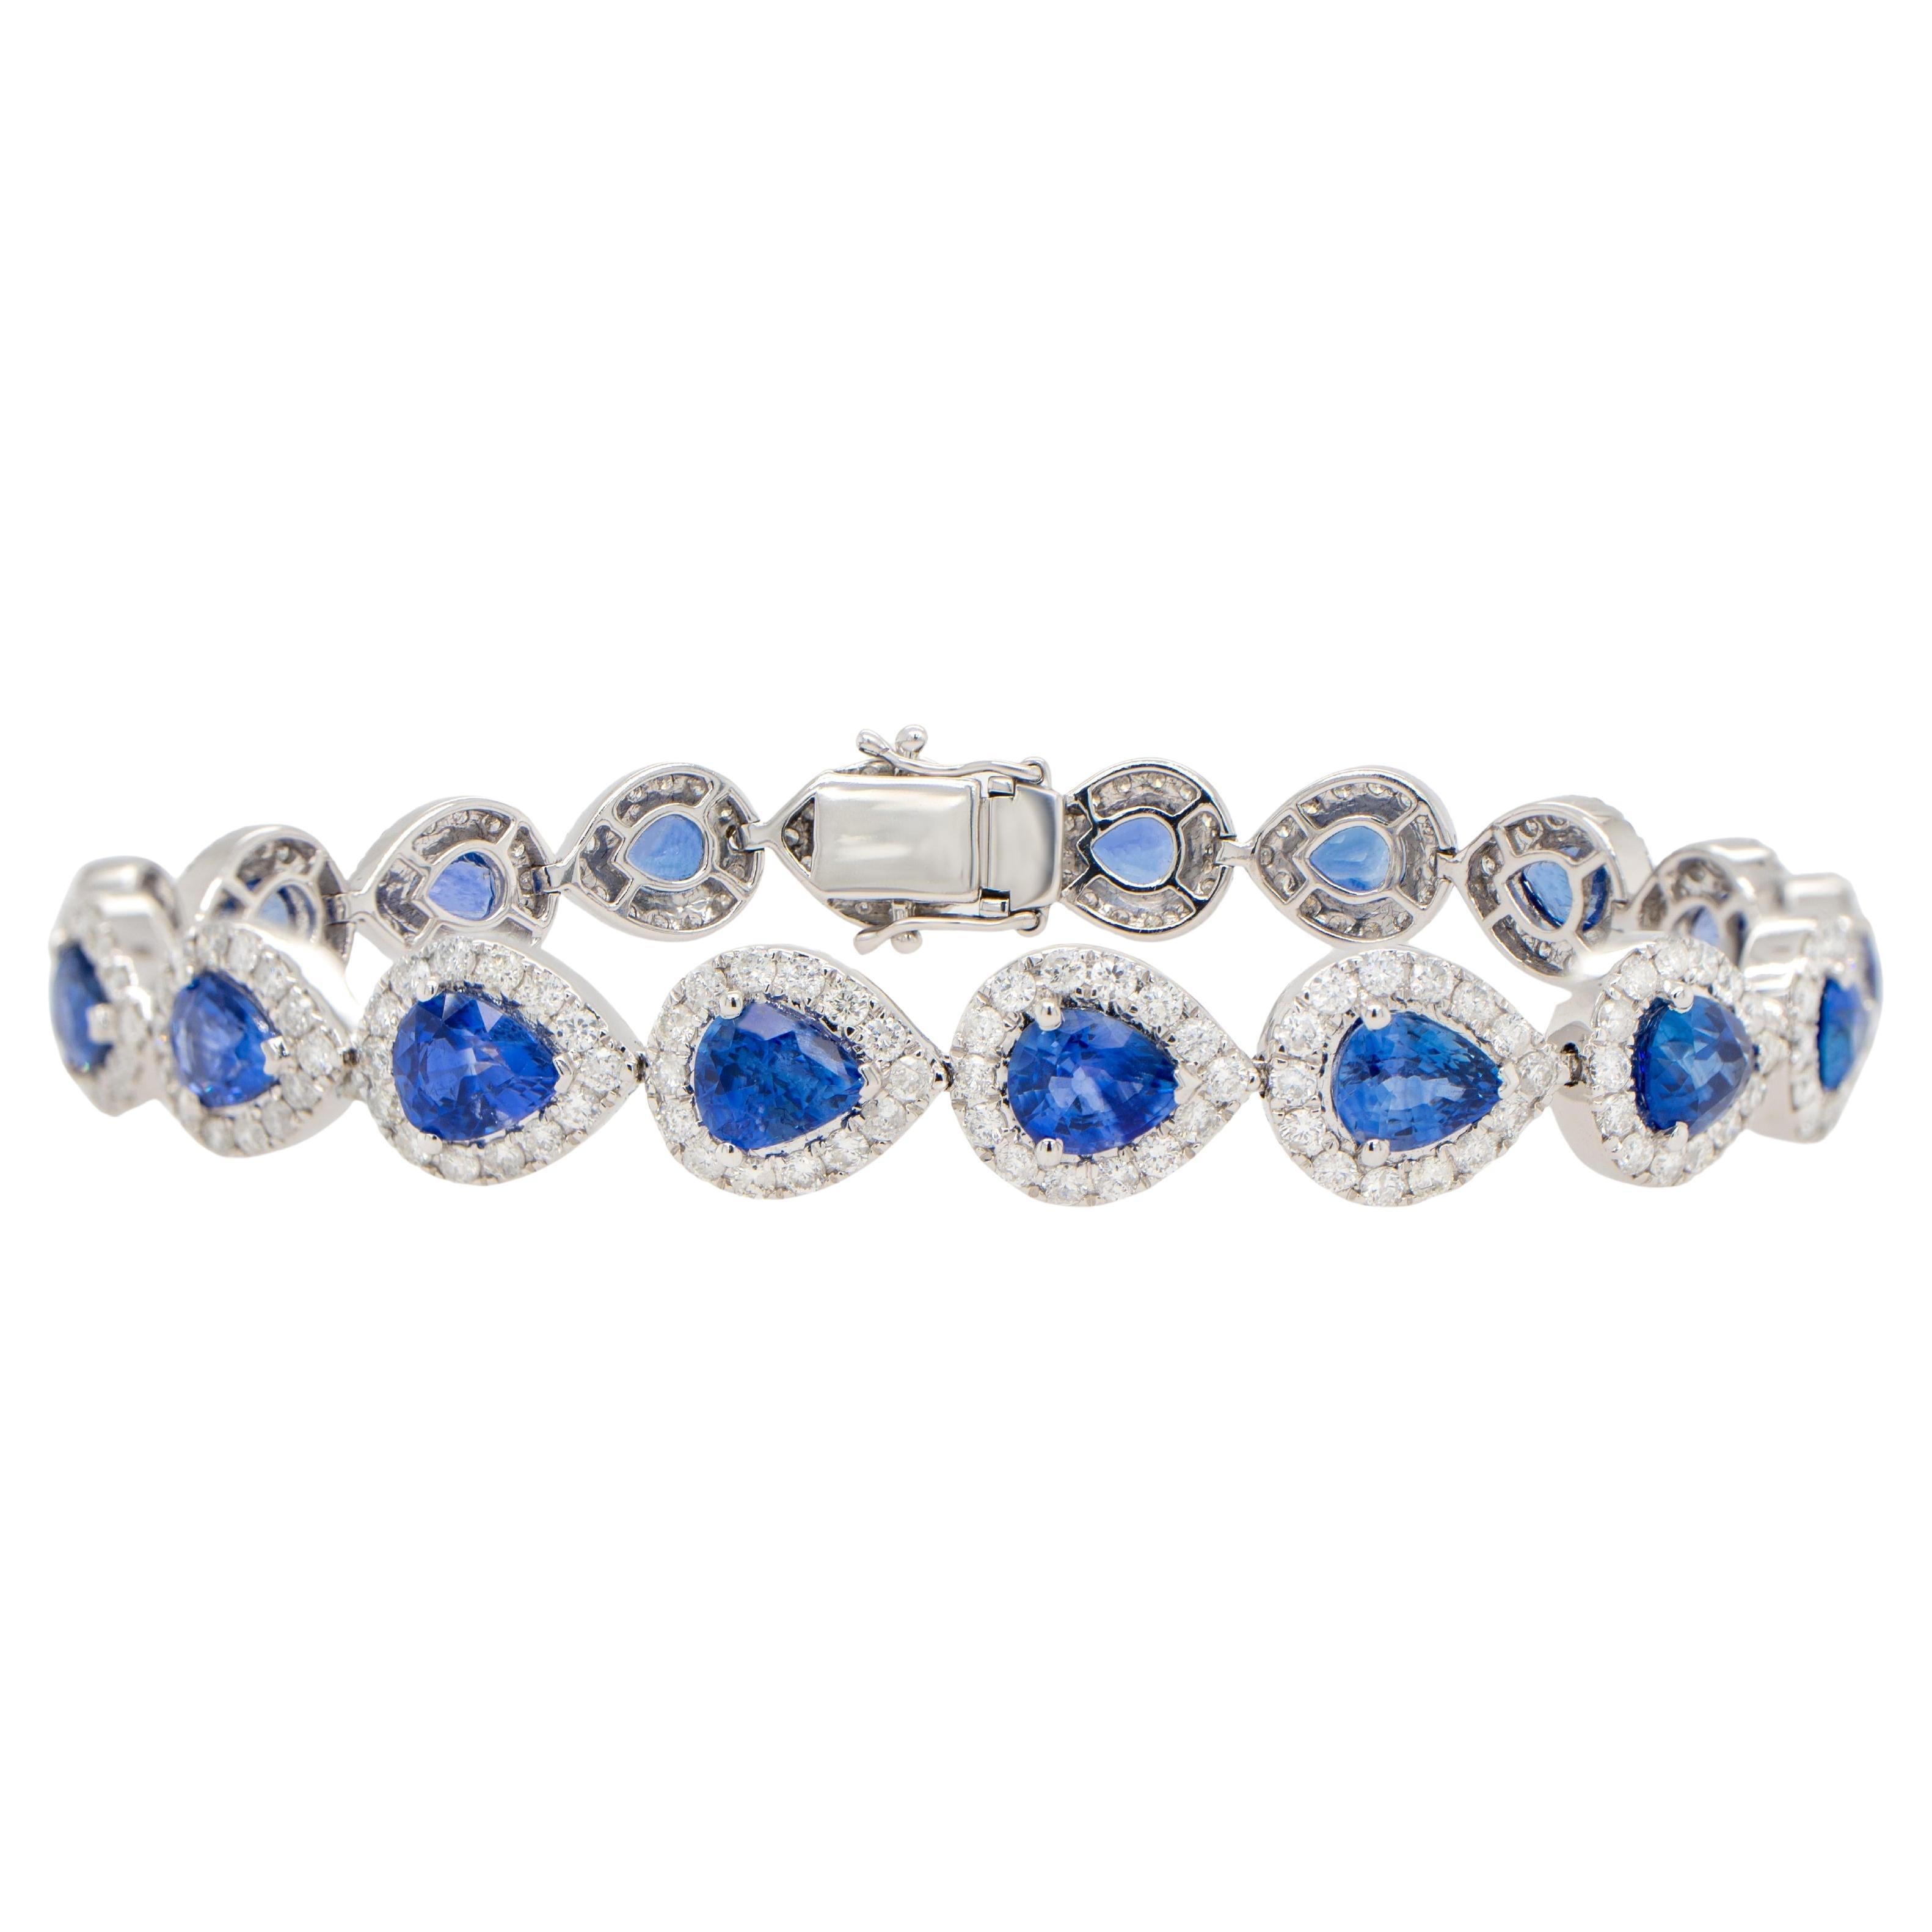 Blue Pear Cut Sapphire Bracelet Diamond Halo 13.6 Carats 18K Gold